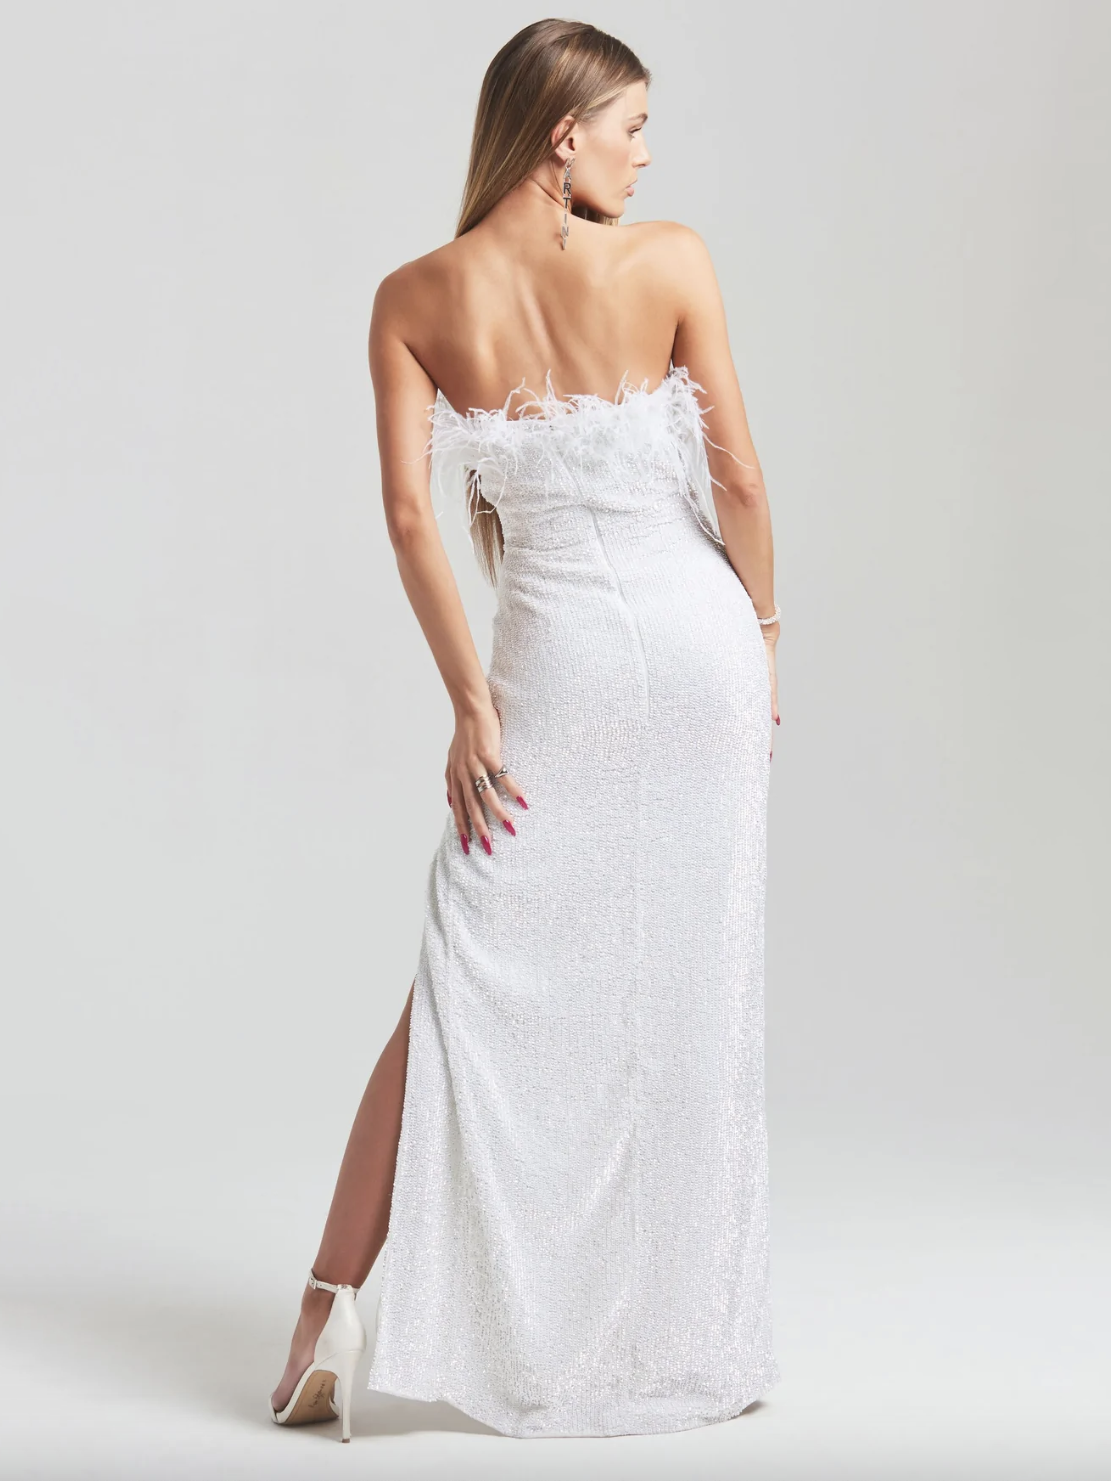 Feather Party Dresses White Sleeveless High-slit Birthday Semi Formal Prom Dress